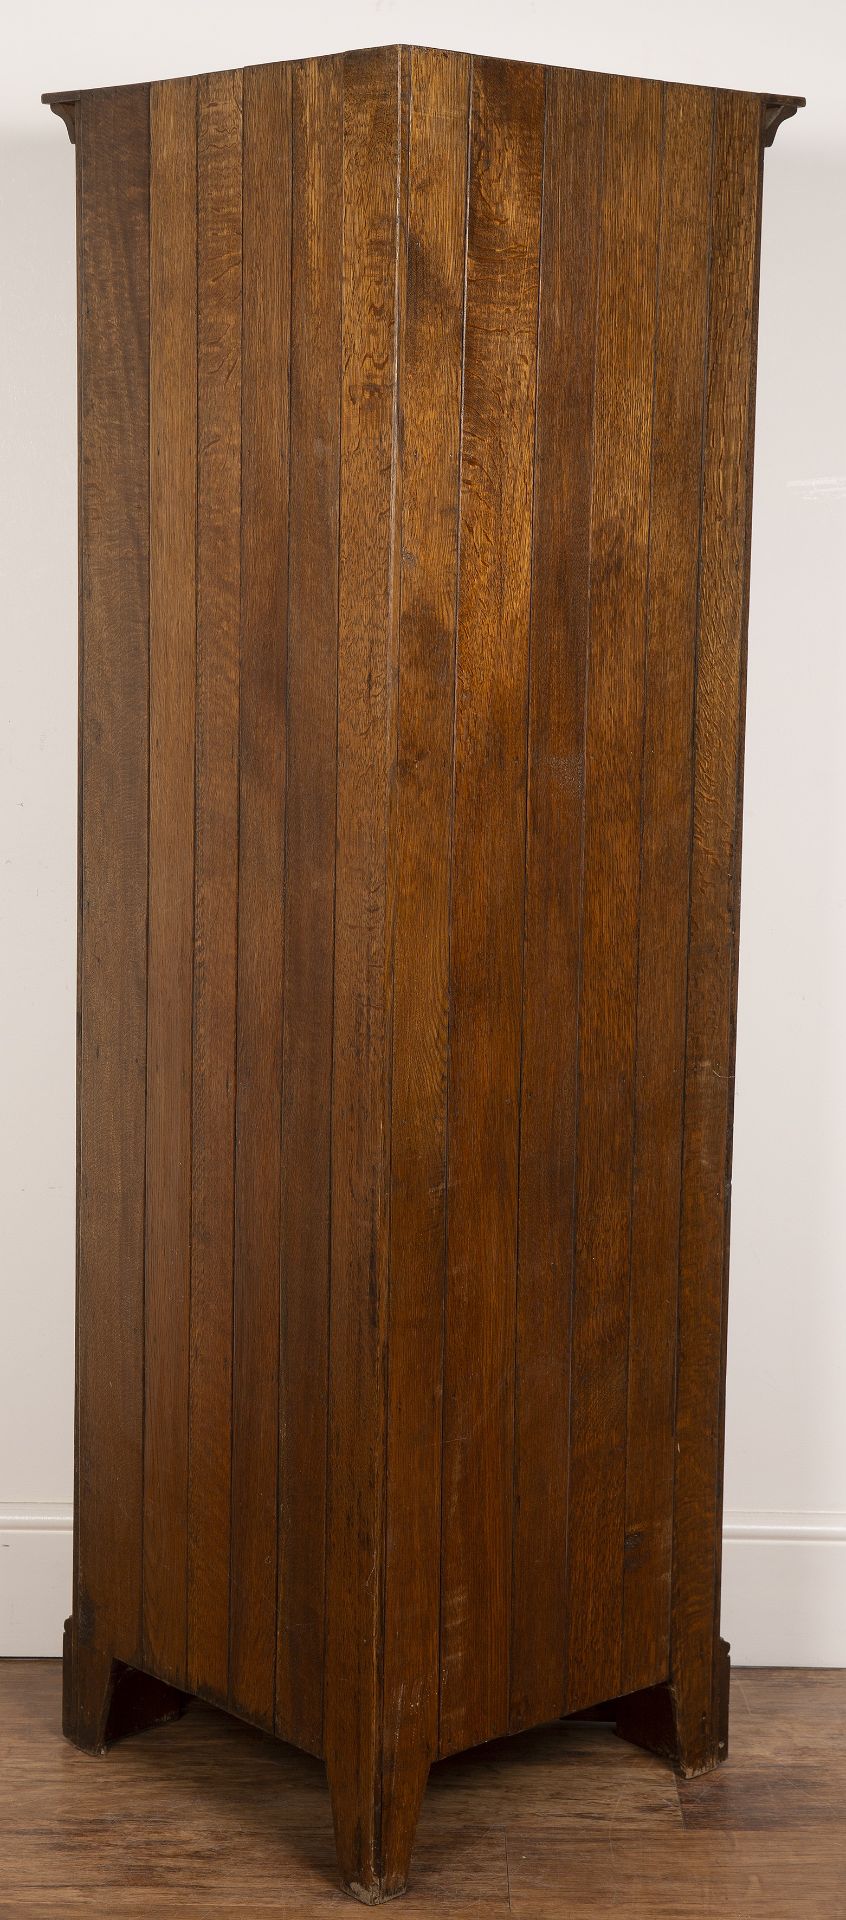 Yorkshire School oak, corner display cabinet, with astragal glazed door above a fielded panel - Image 5 of 5